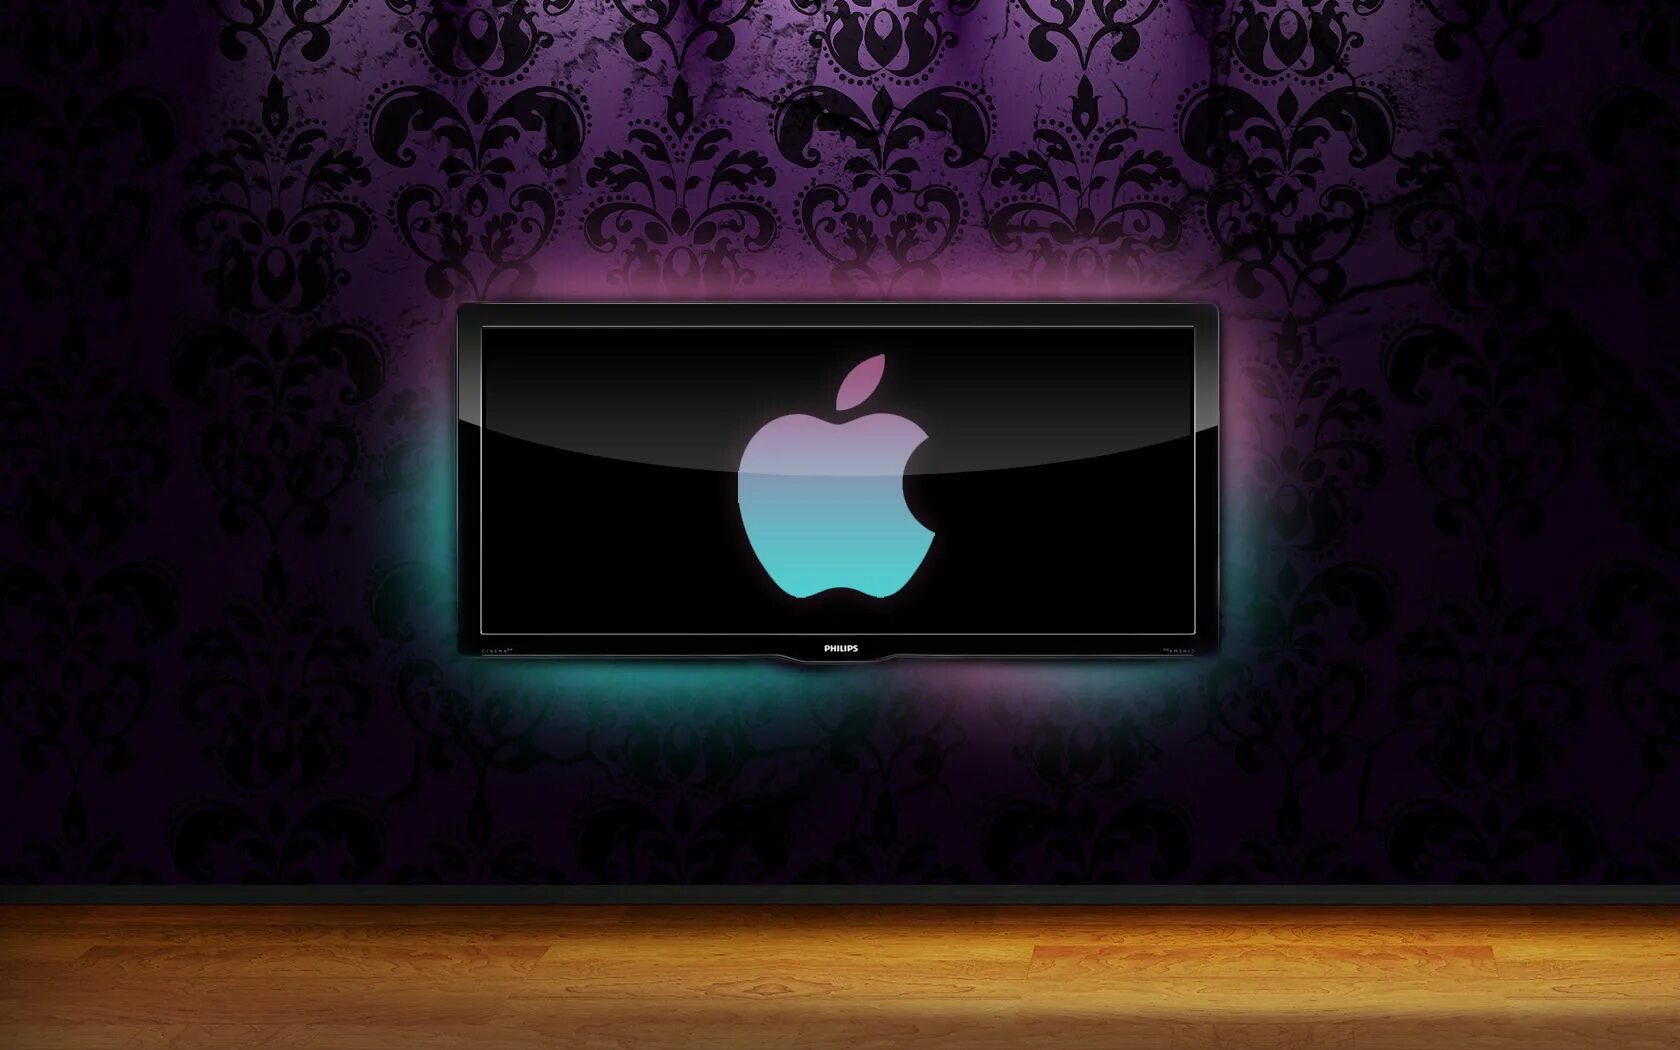 Заставки на андроид телевизоров. Живые обои на телевизор. Обои для андроид телевизора. Заставка на экран ноутбука. Обои Apple TV.